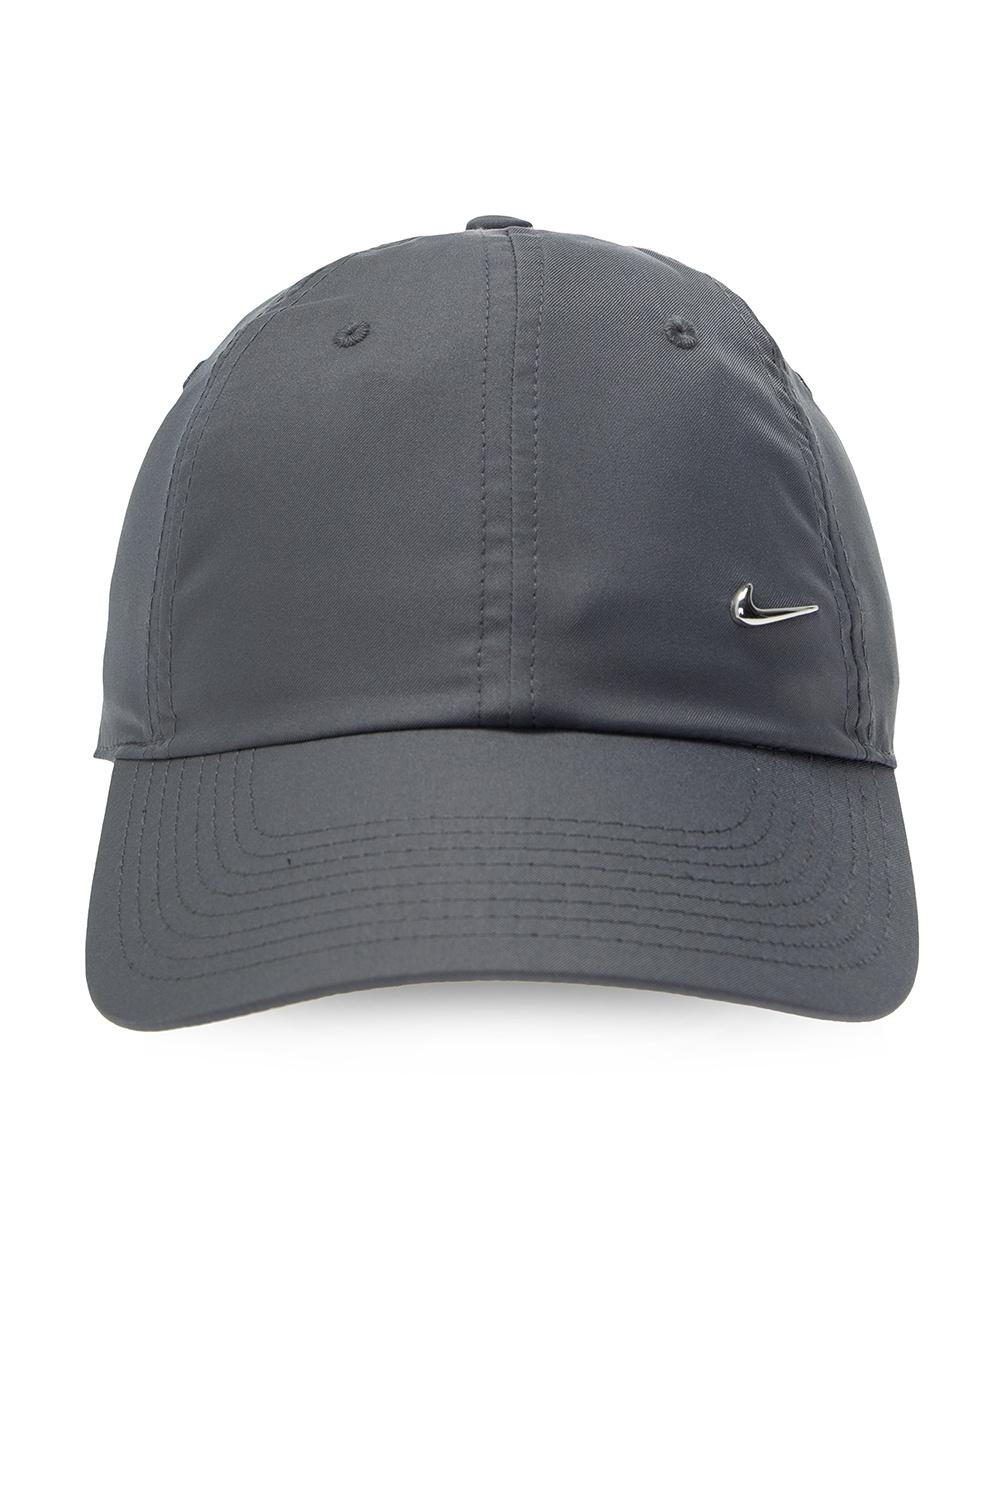 Nike Synthetic Metal Swoosh Cap in Grey (Gray) - Save 54% | Lyst